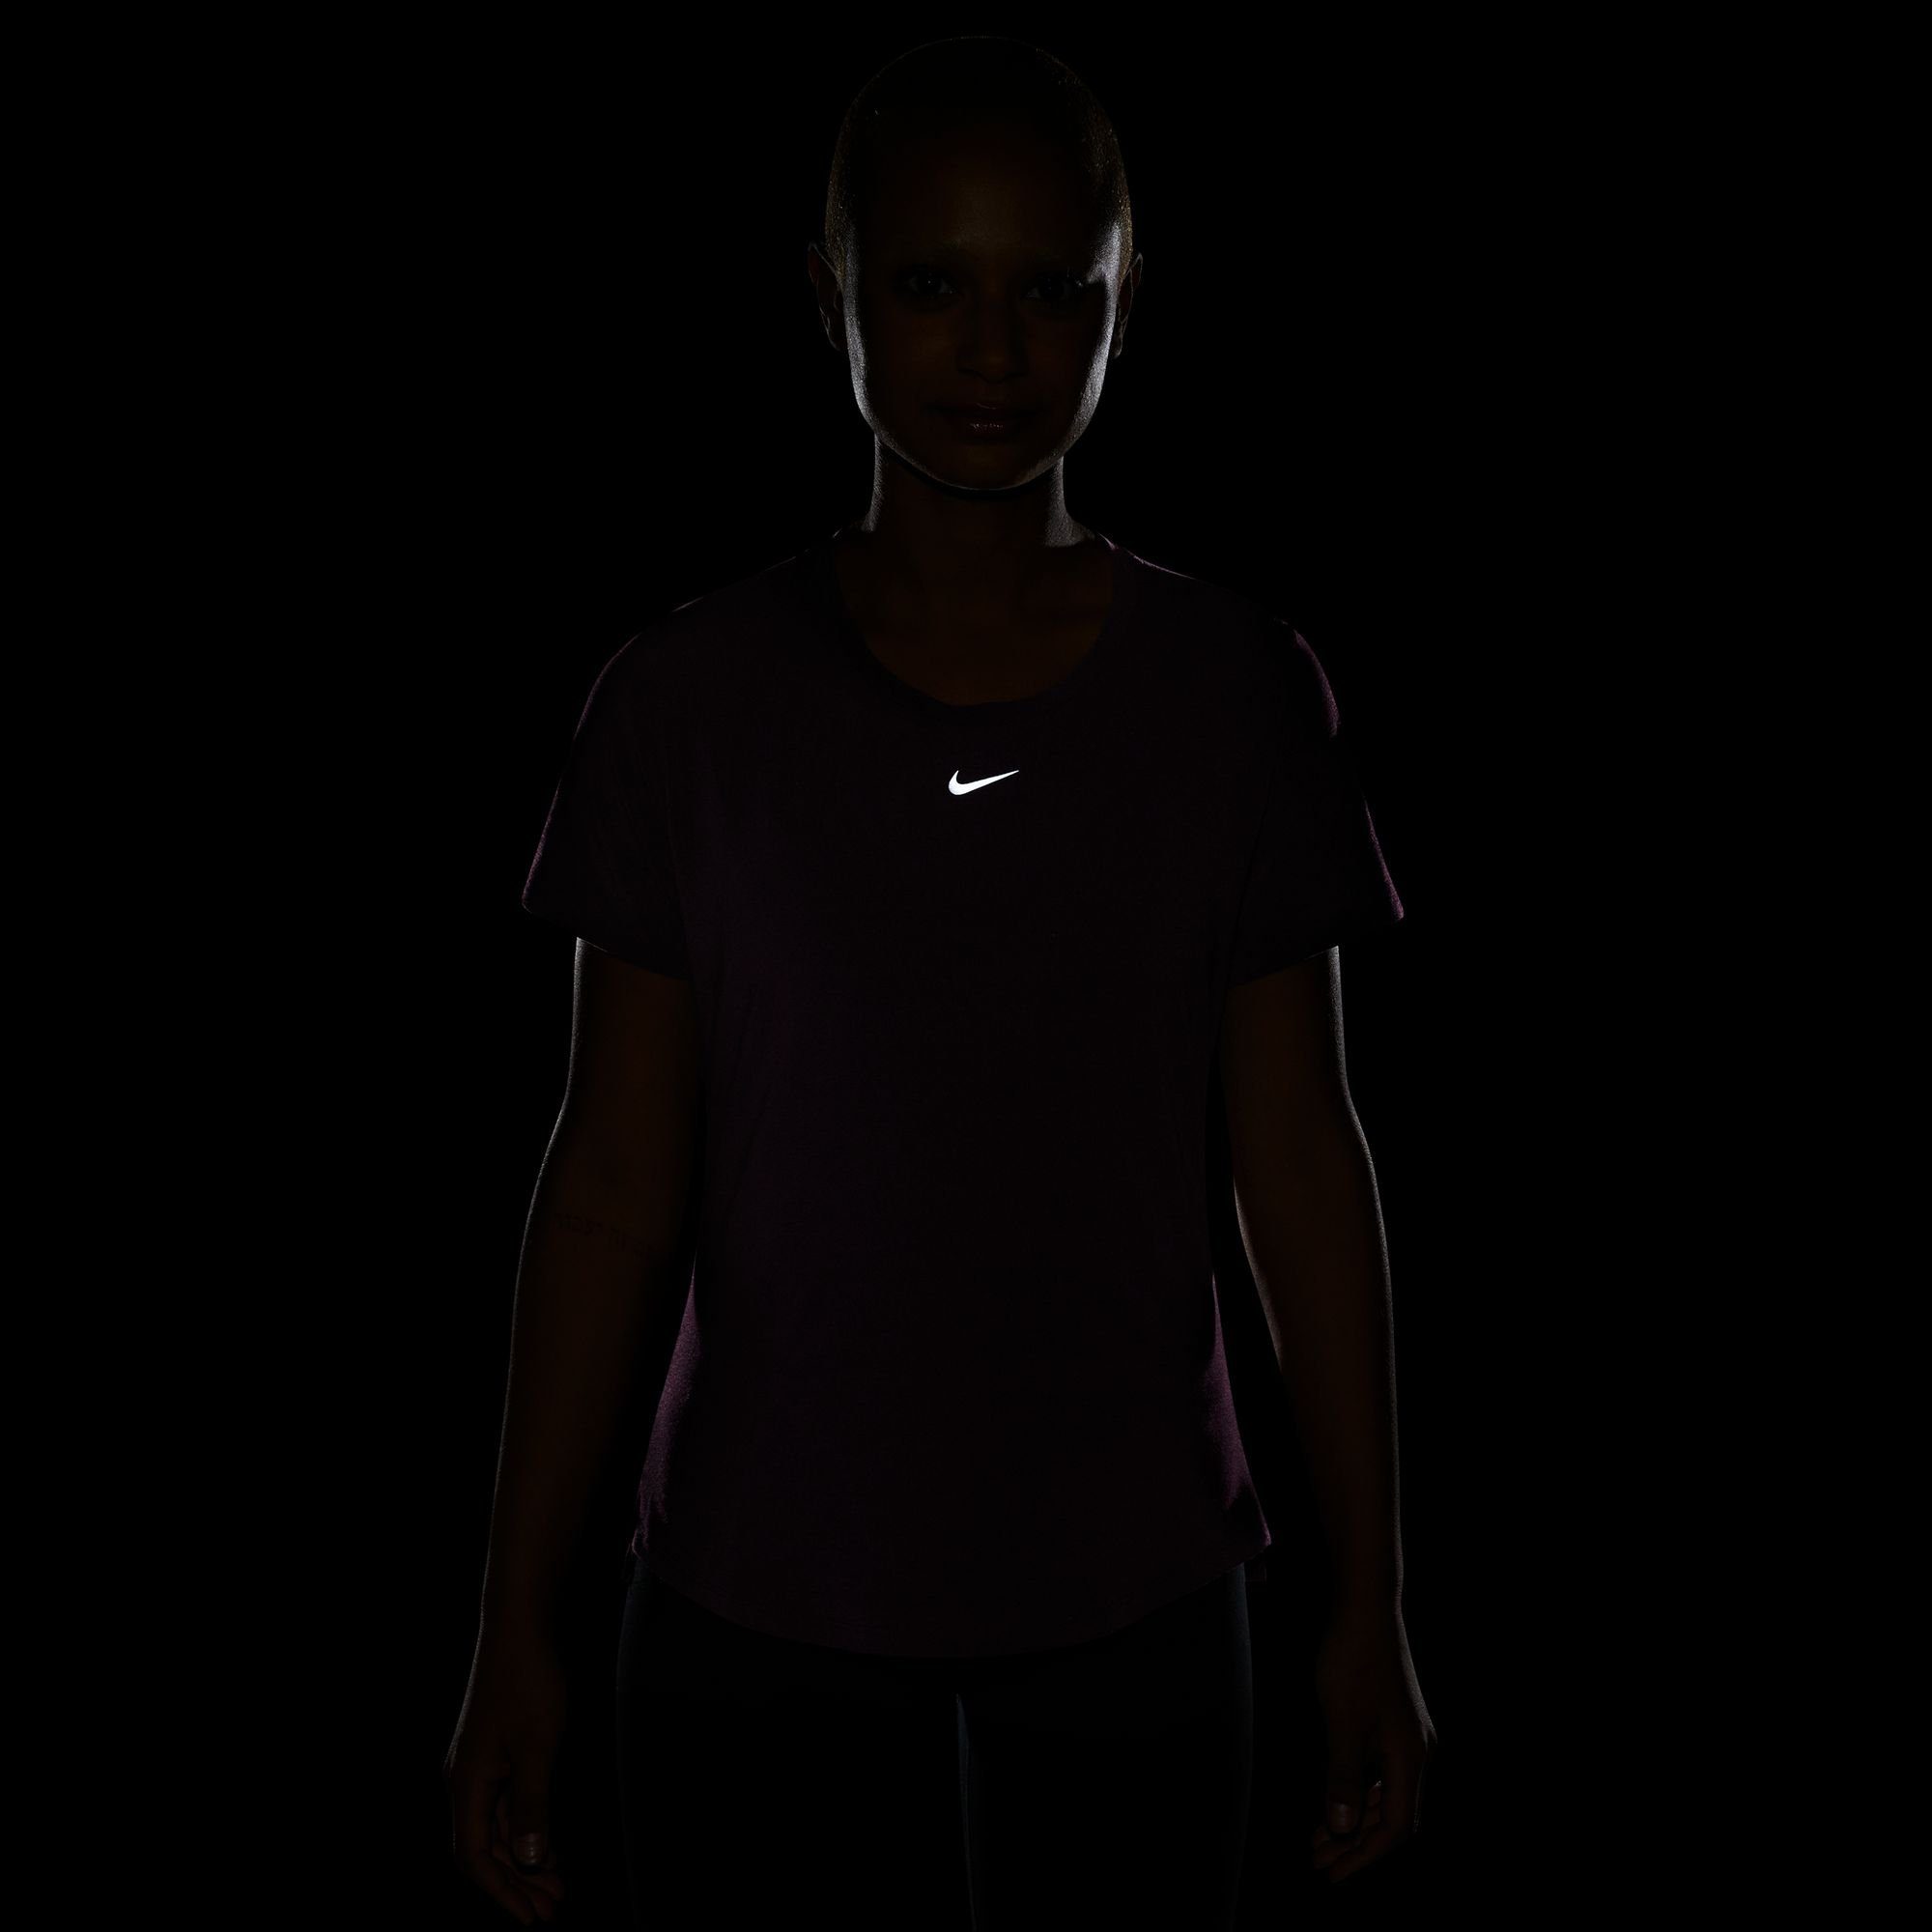 SILV Nike DRI-FIT FIT STANDARD BORDEAUX/REFLECTIVE WOMEN'S TOP Trainingsshirt LUXE SHORT-SLEEVE UV ONE